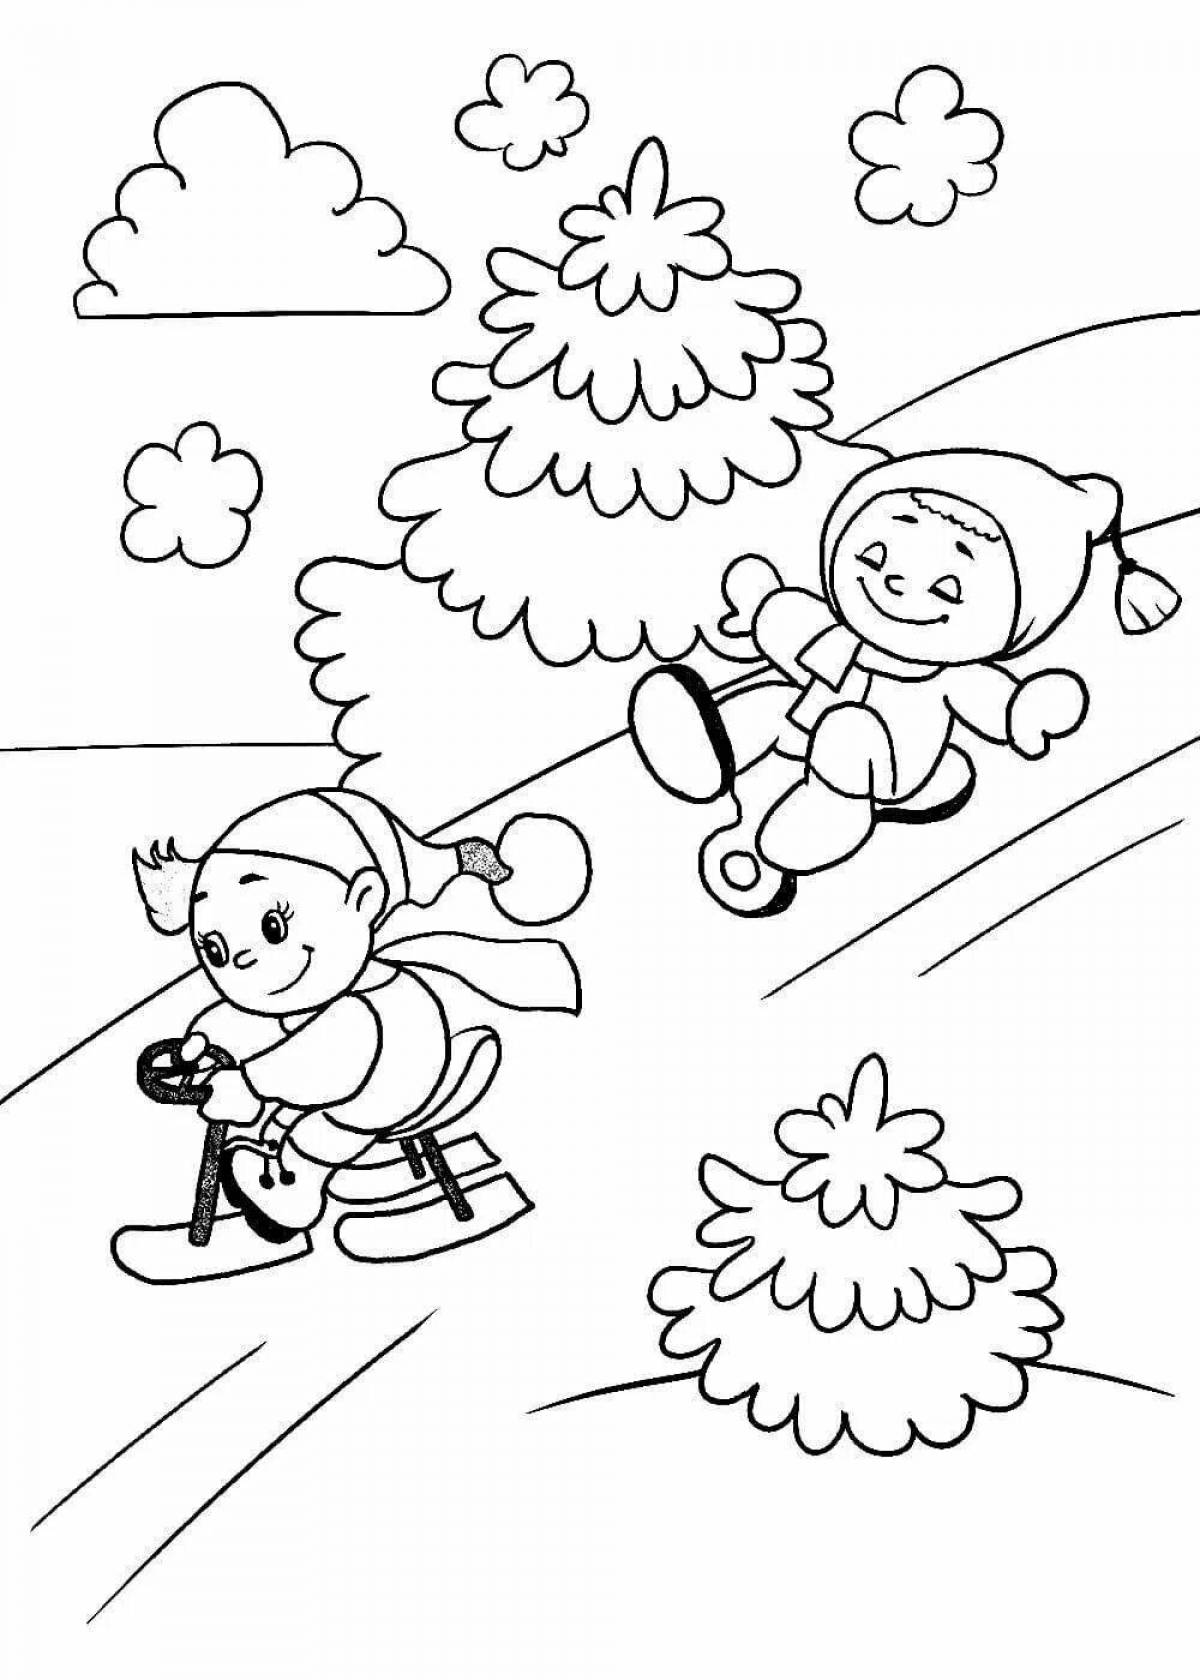 Joyful winter safety coloring book for preschoolers